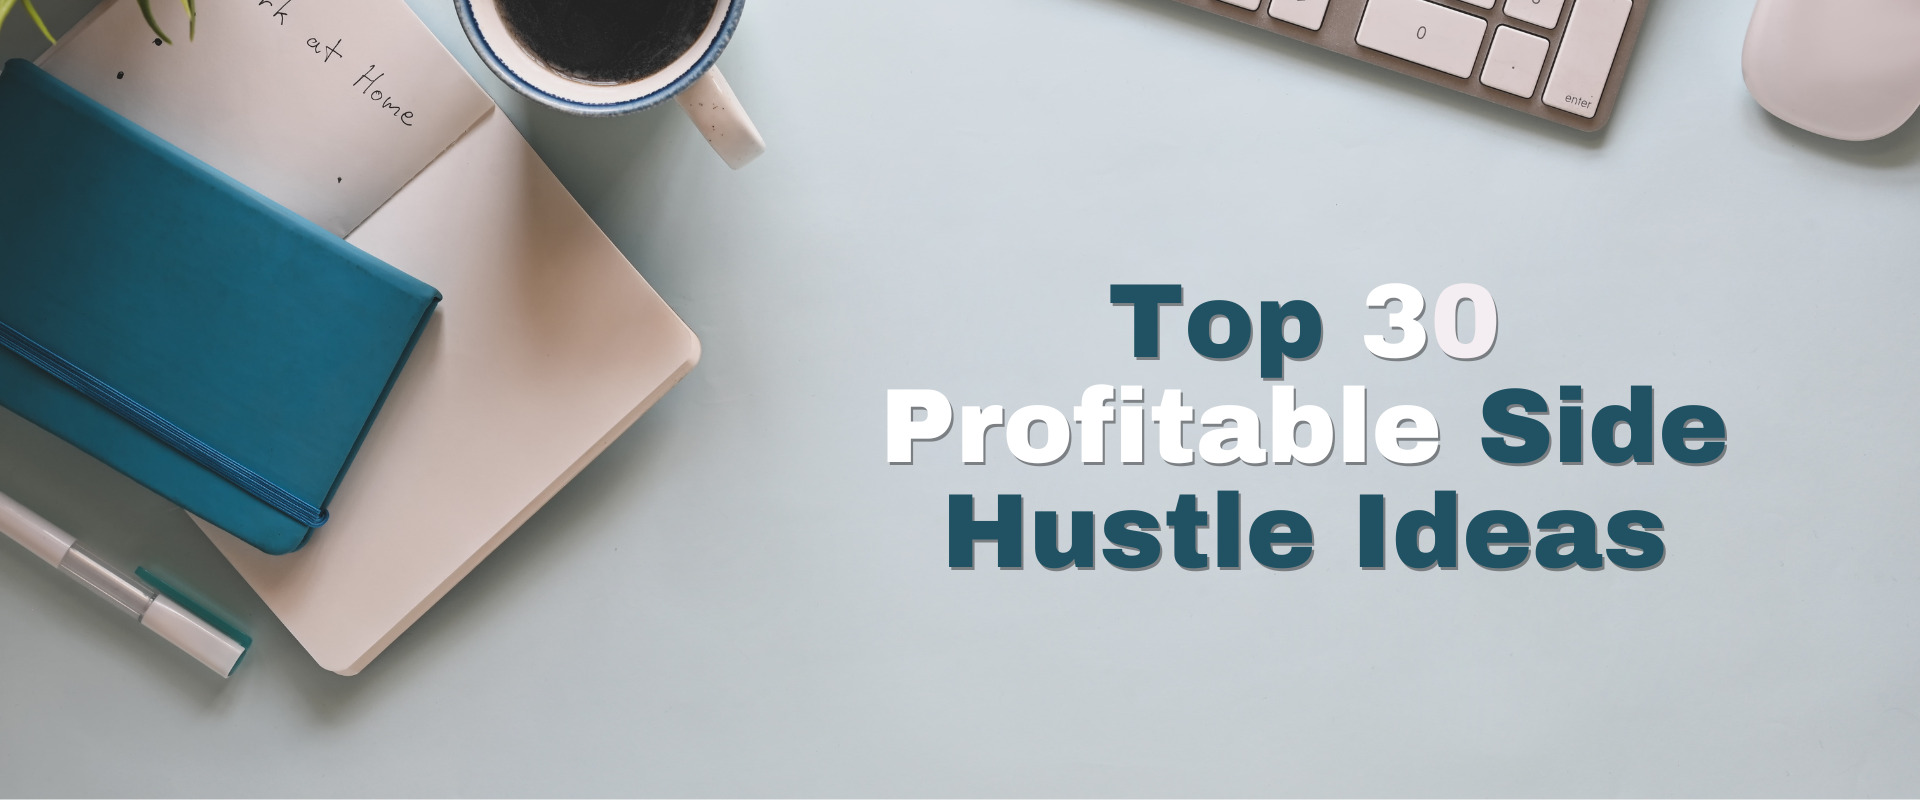 Top 30 Profitable Side Hustle Ideas